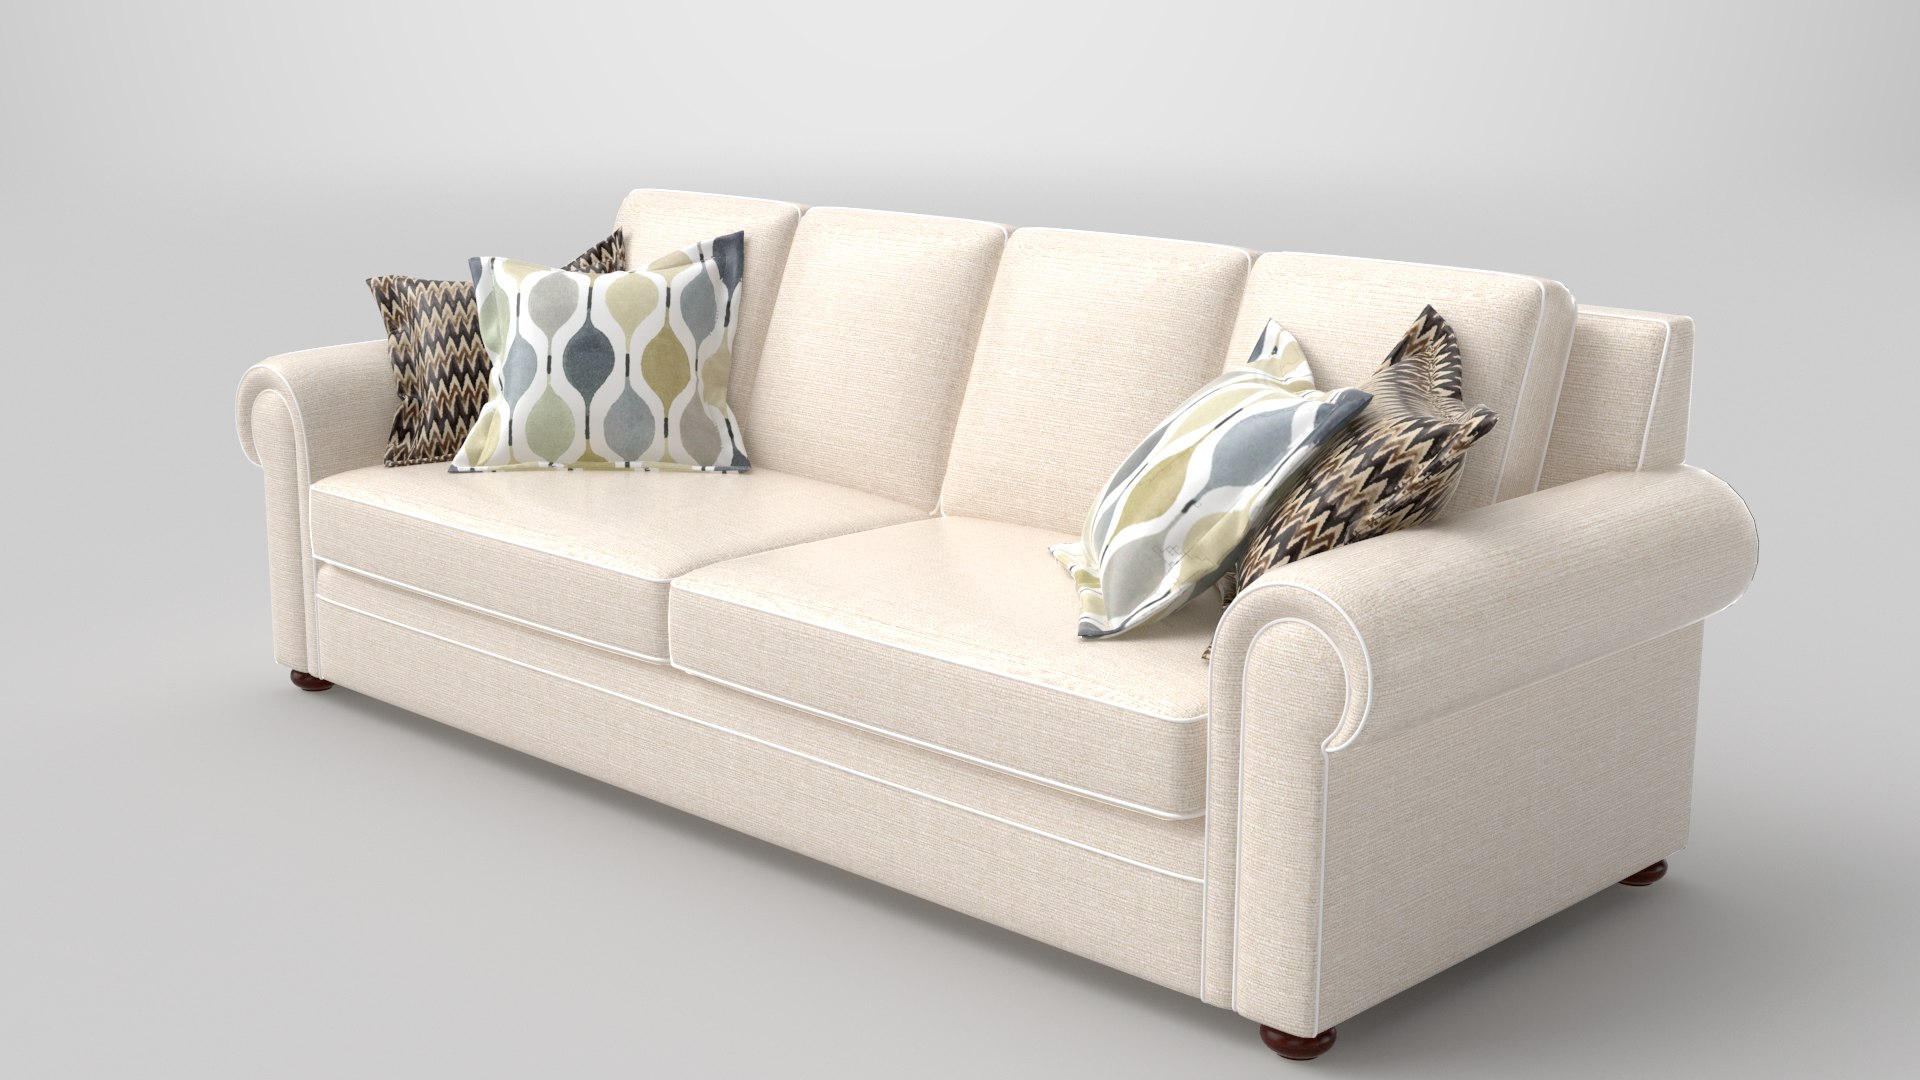 Realistic sofa  3D  model  TurboSquid 1507805